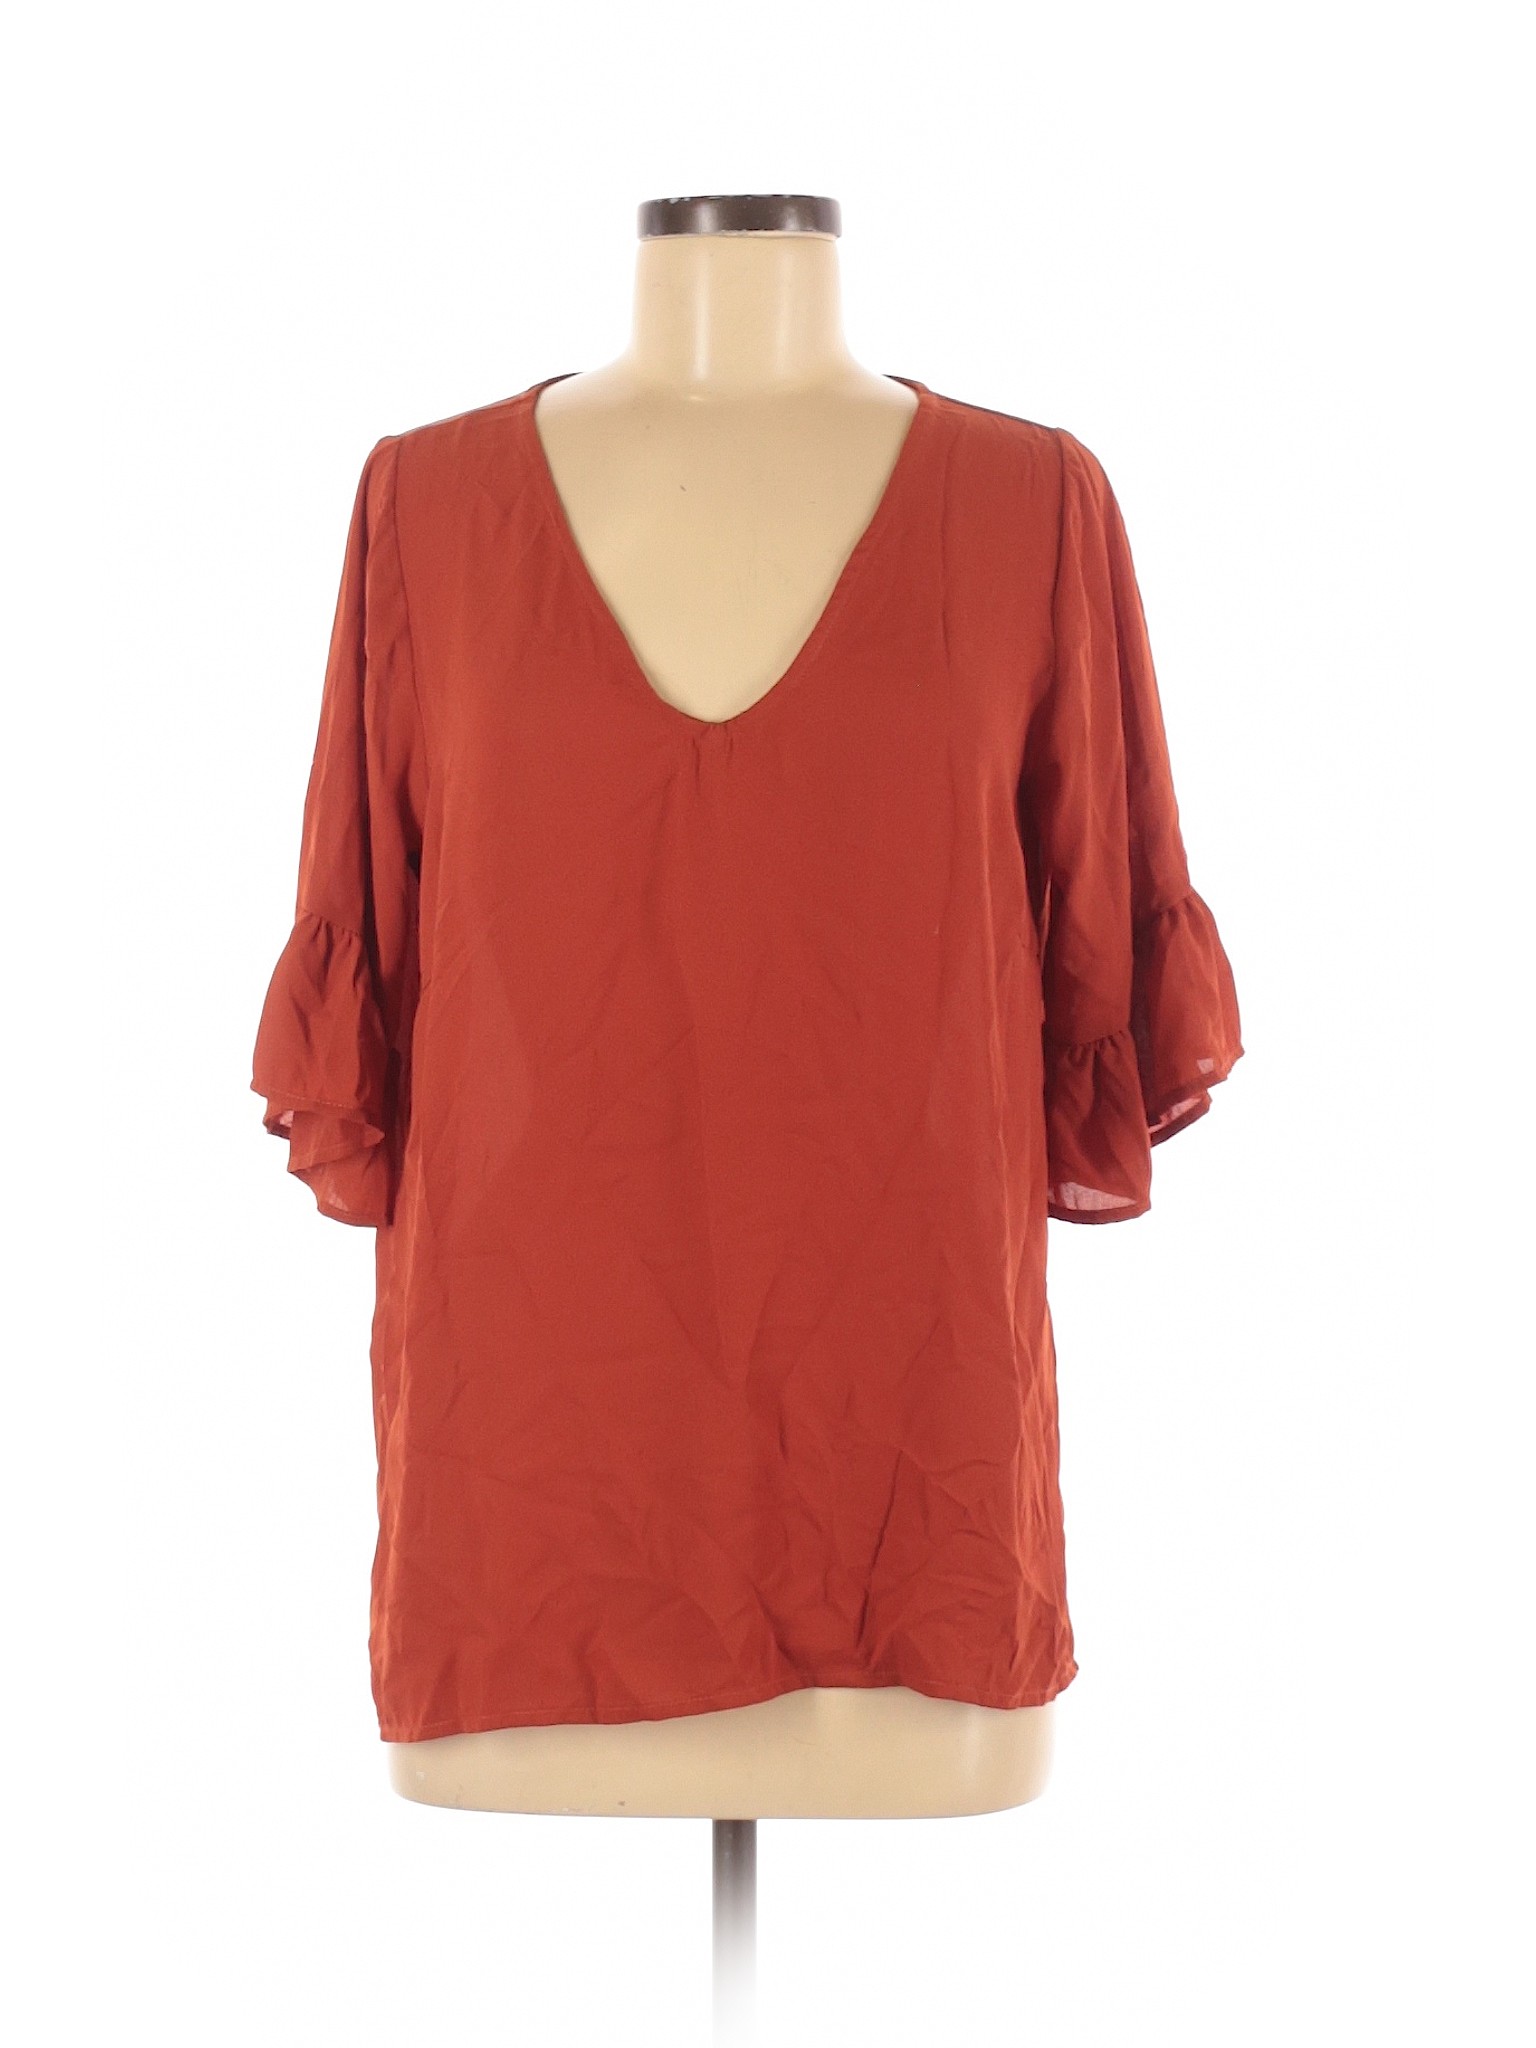 Papermoon Women Orange 3/4 Sleeve Blouse M | eBay